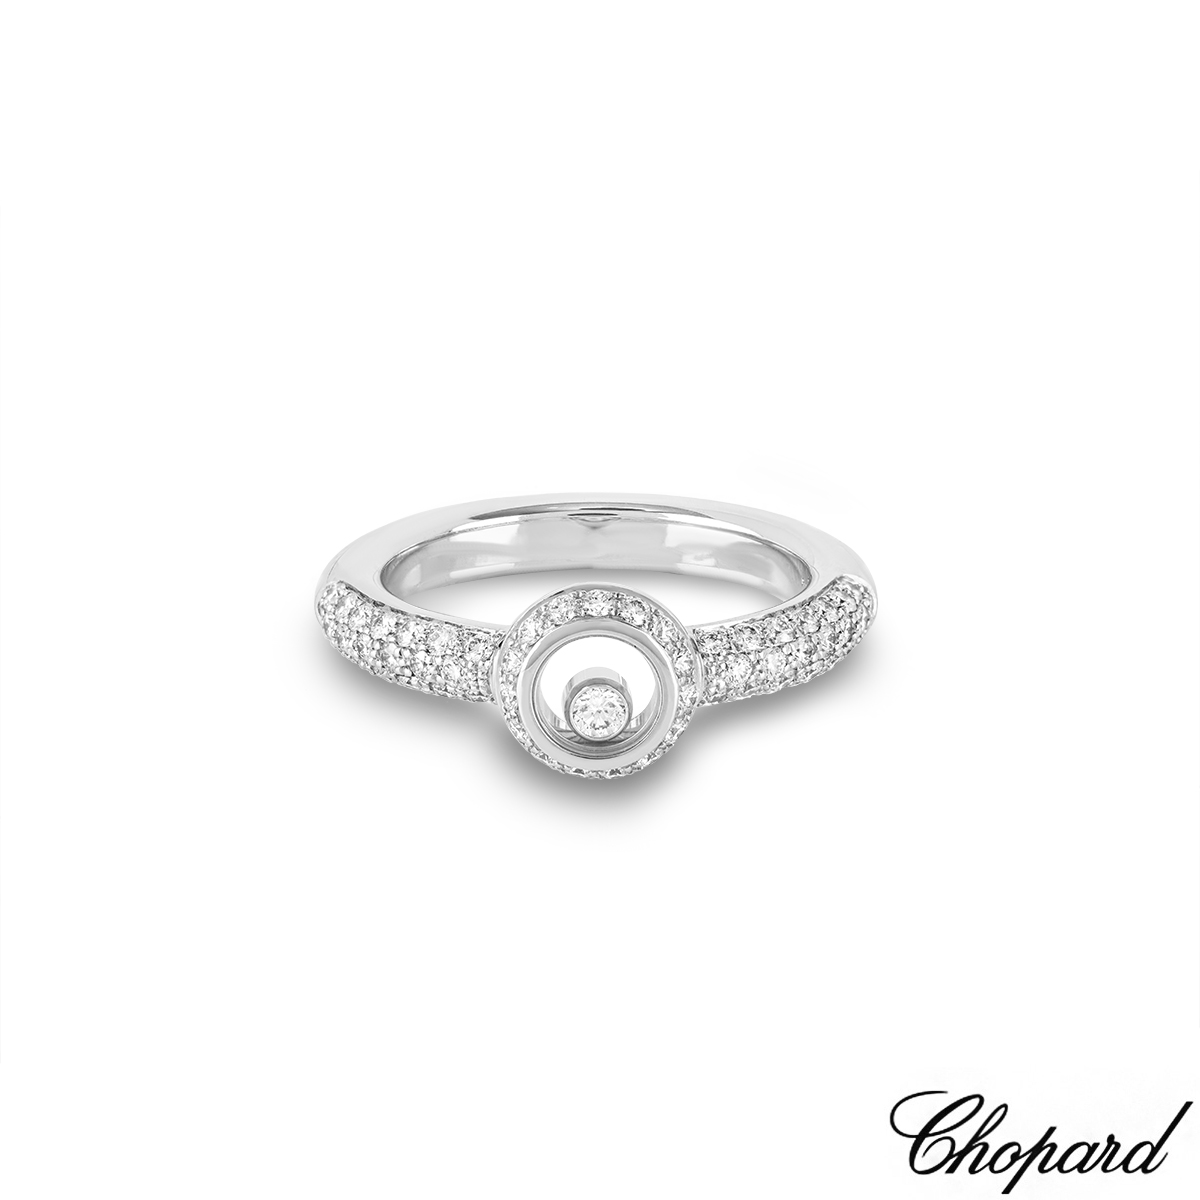 Chopard White Gold Happy Diamonds Ring 82/2902-1109